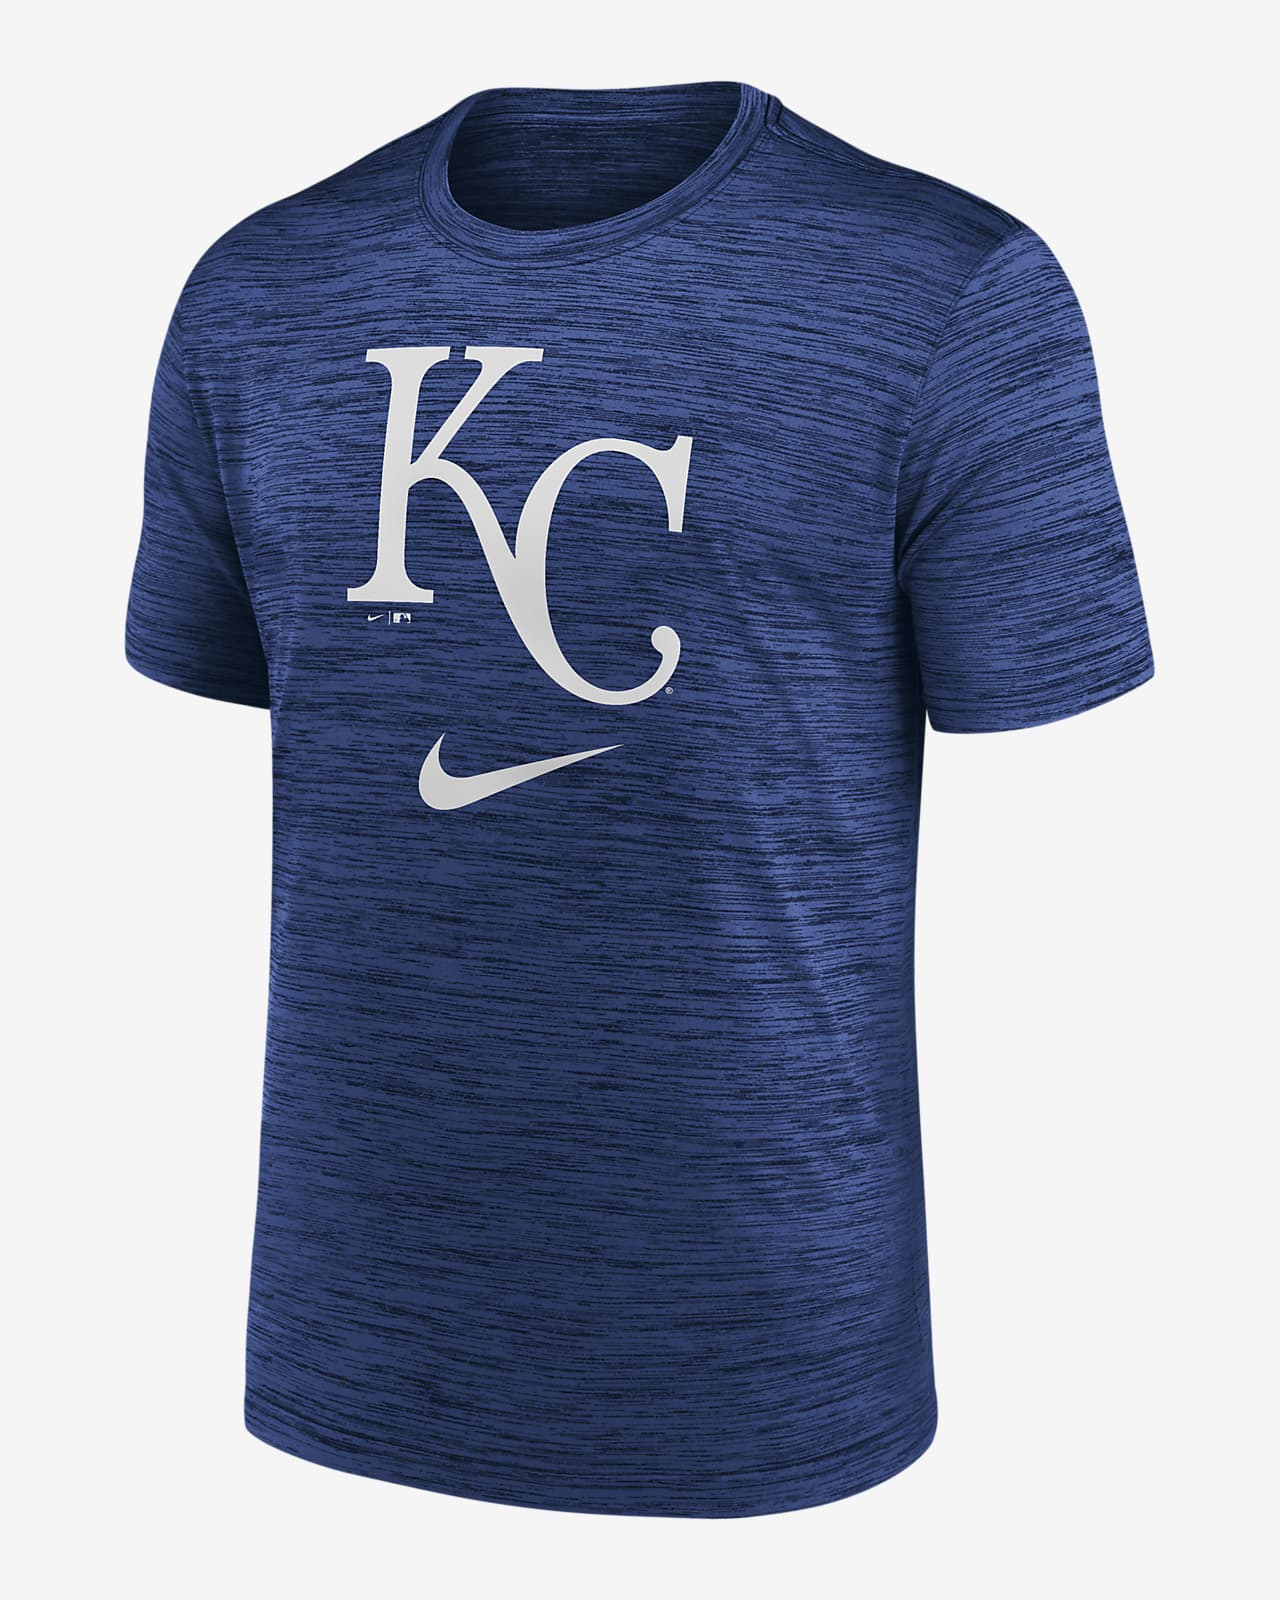 KC Baseball Club - Kansas City Royals T-Shirt